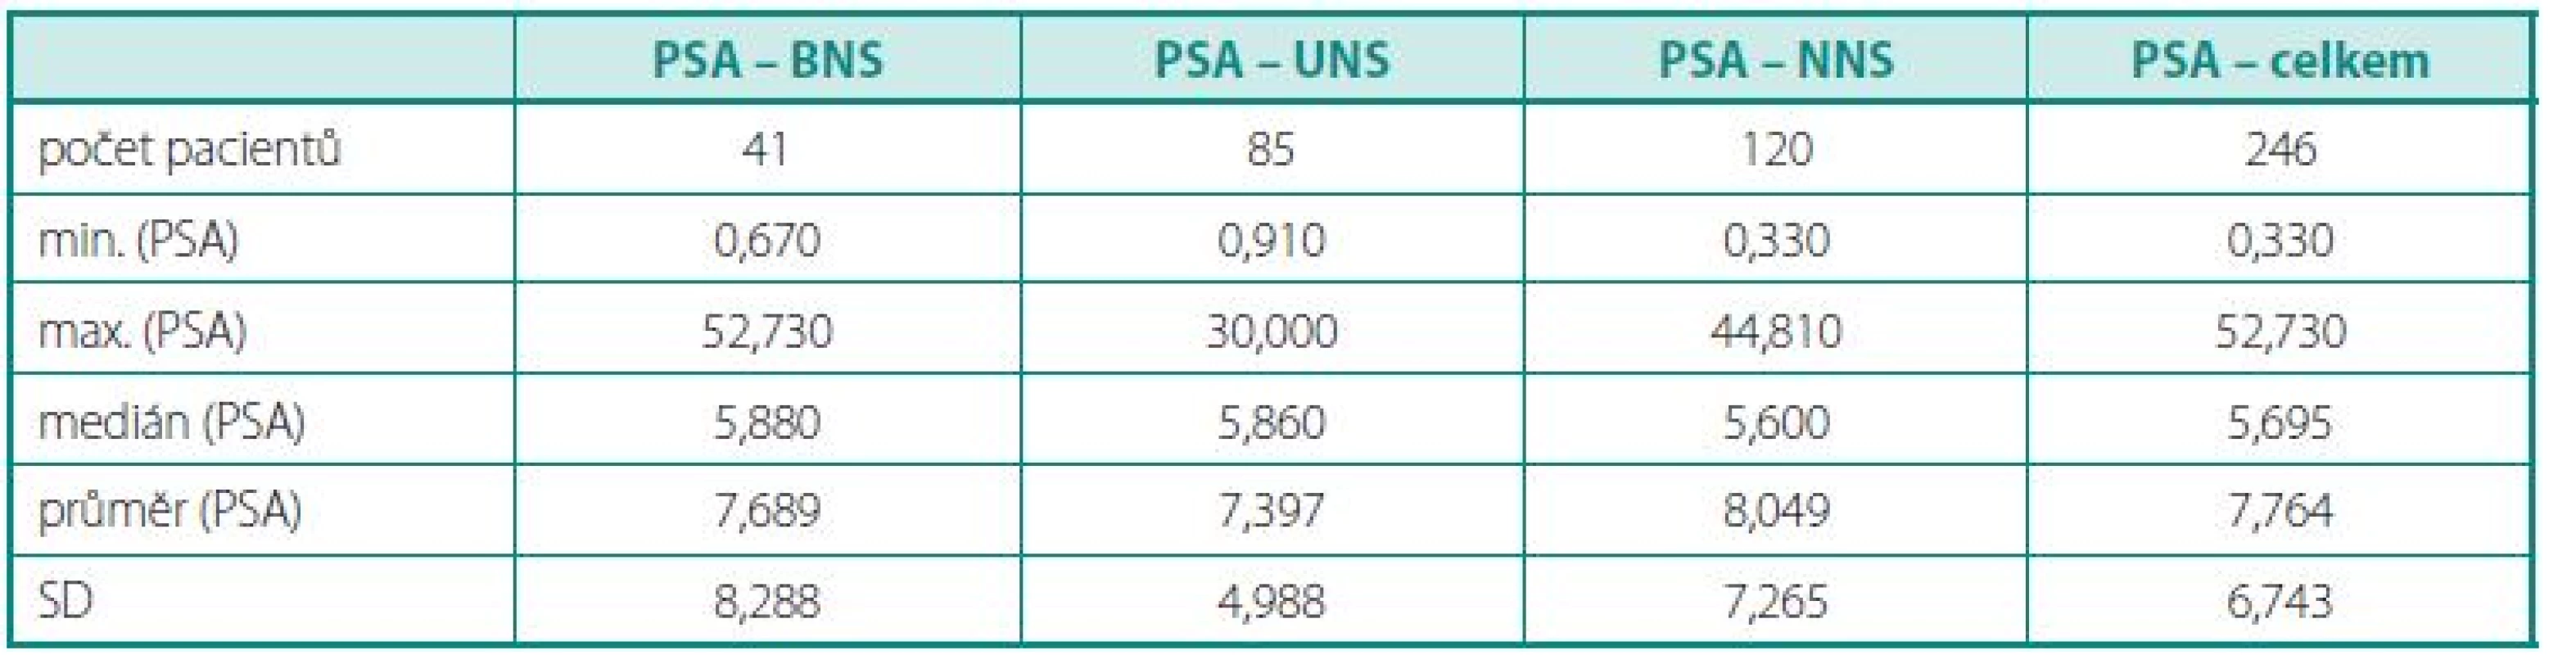 Charakteristika souboru podle PSA, pacienti rozděleni do skupin BNS, UNS, NNS
Table 6. File characteristics by PSA, patients are divided into groups BNS, UNS, NNS